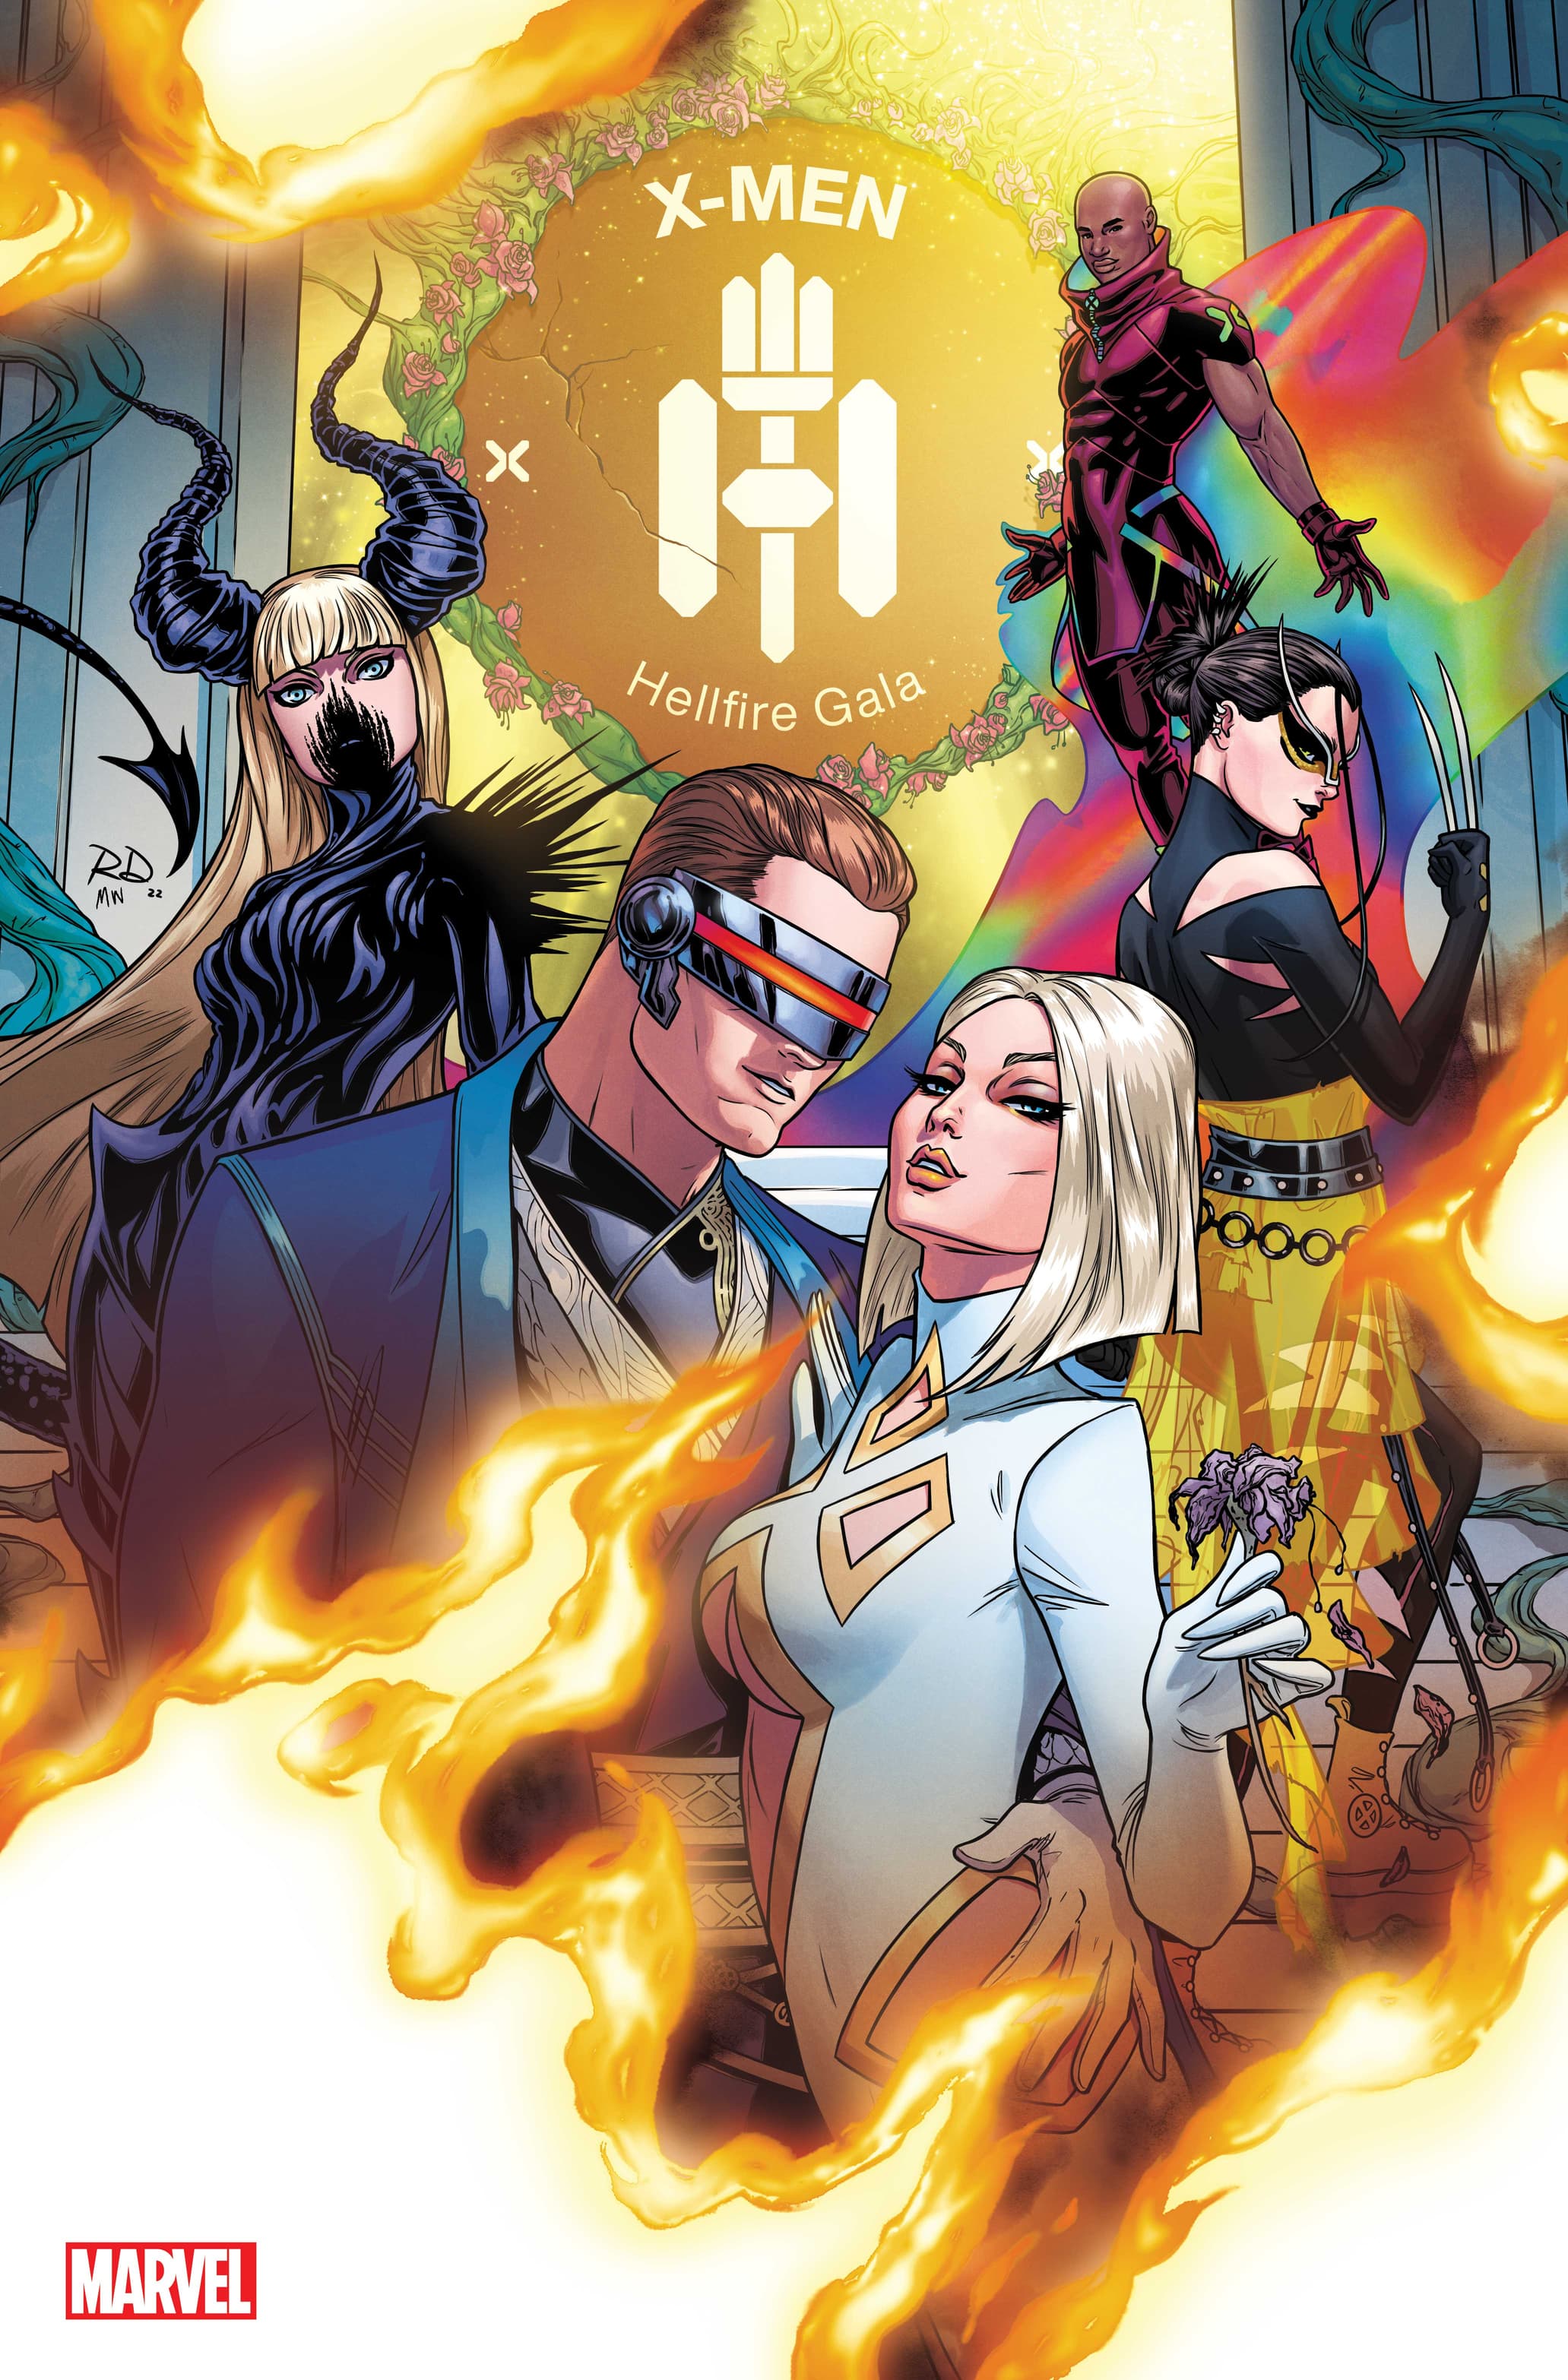 X-Men: Hellfire Gala #1 cover by Russell Dauterman